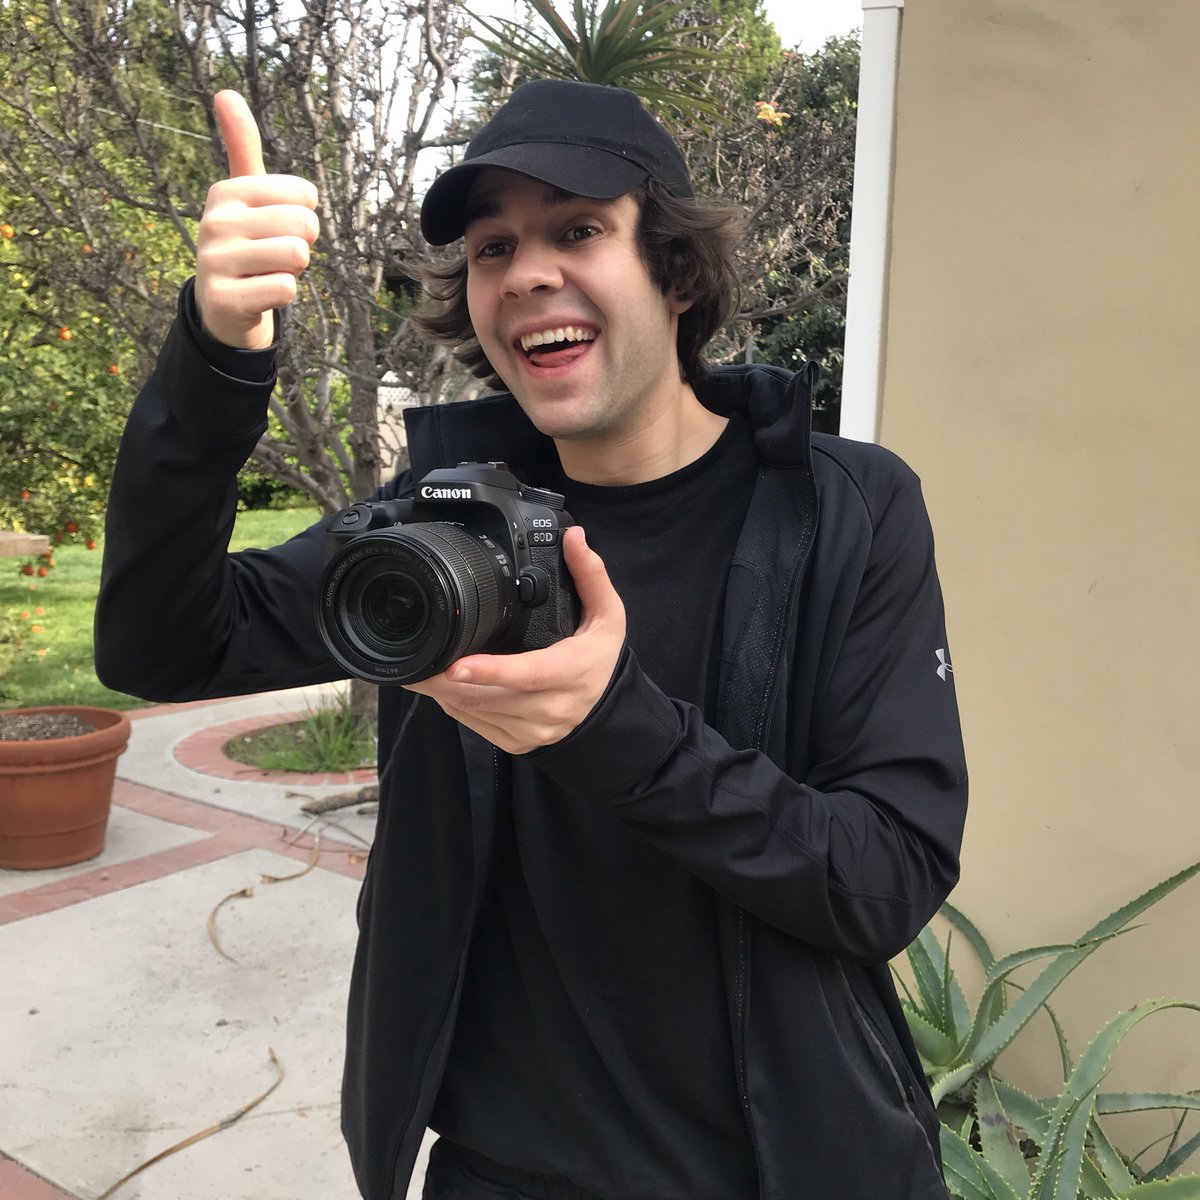 Brandon Calvillo 在 Twitter 上. david dobrik vlog camera. 